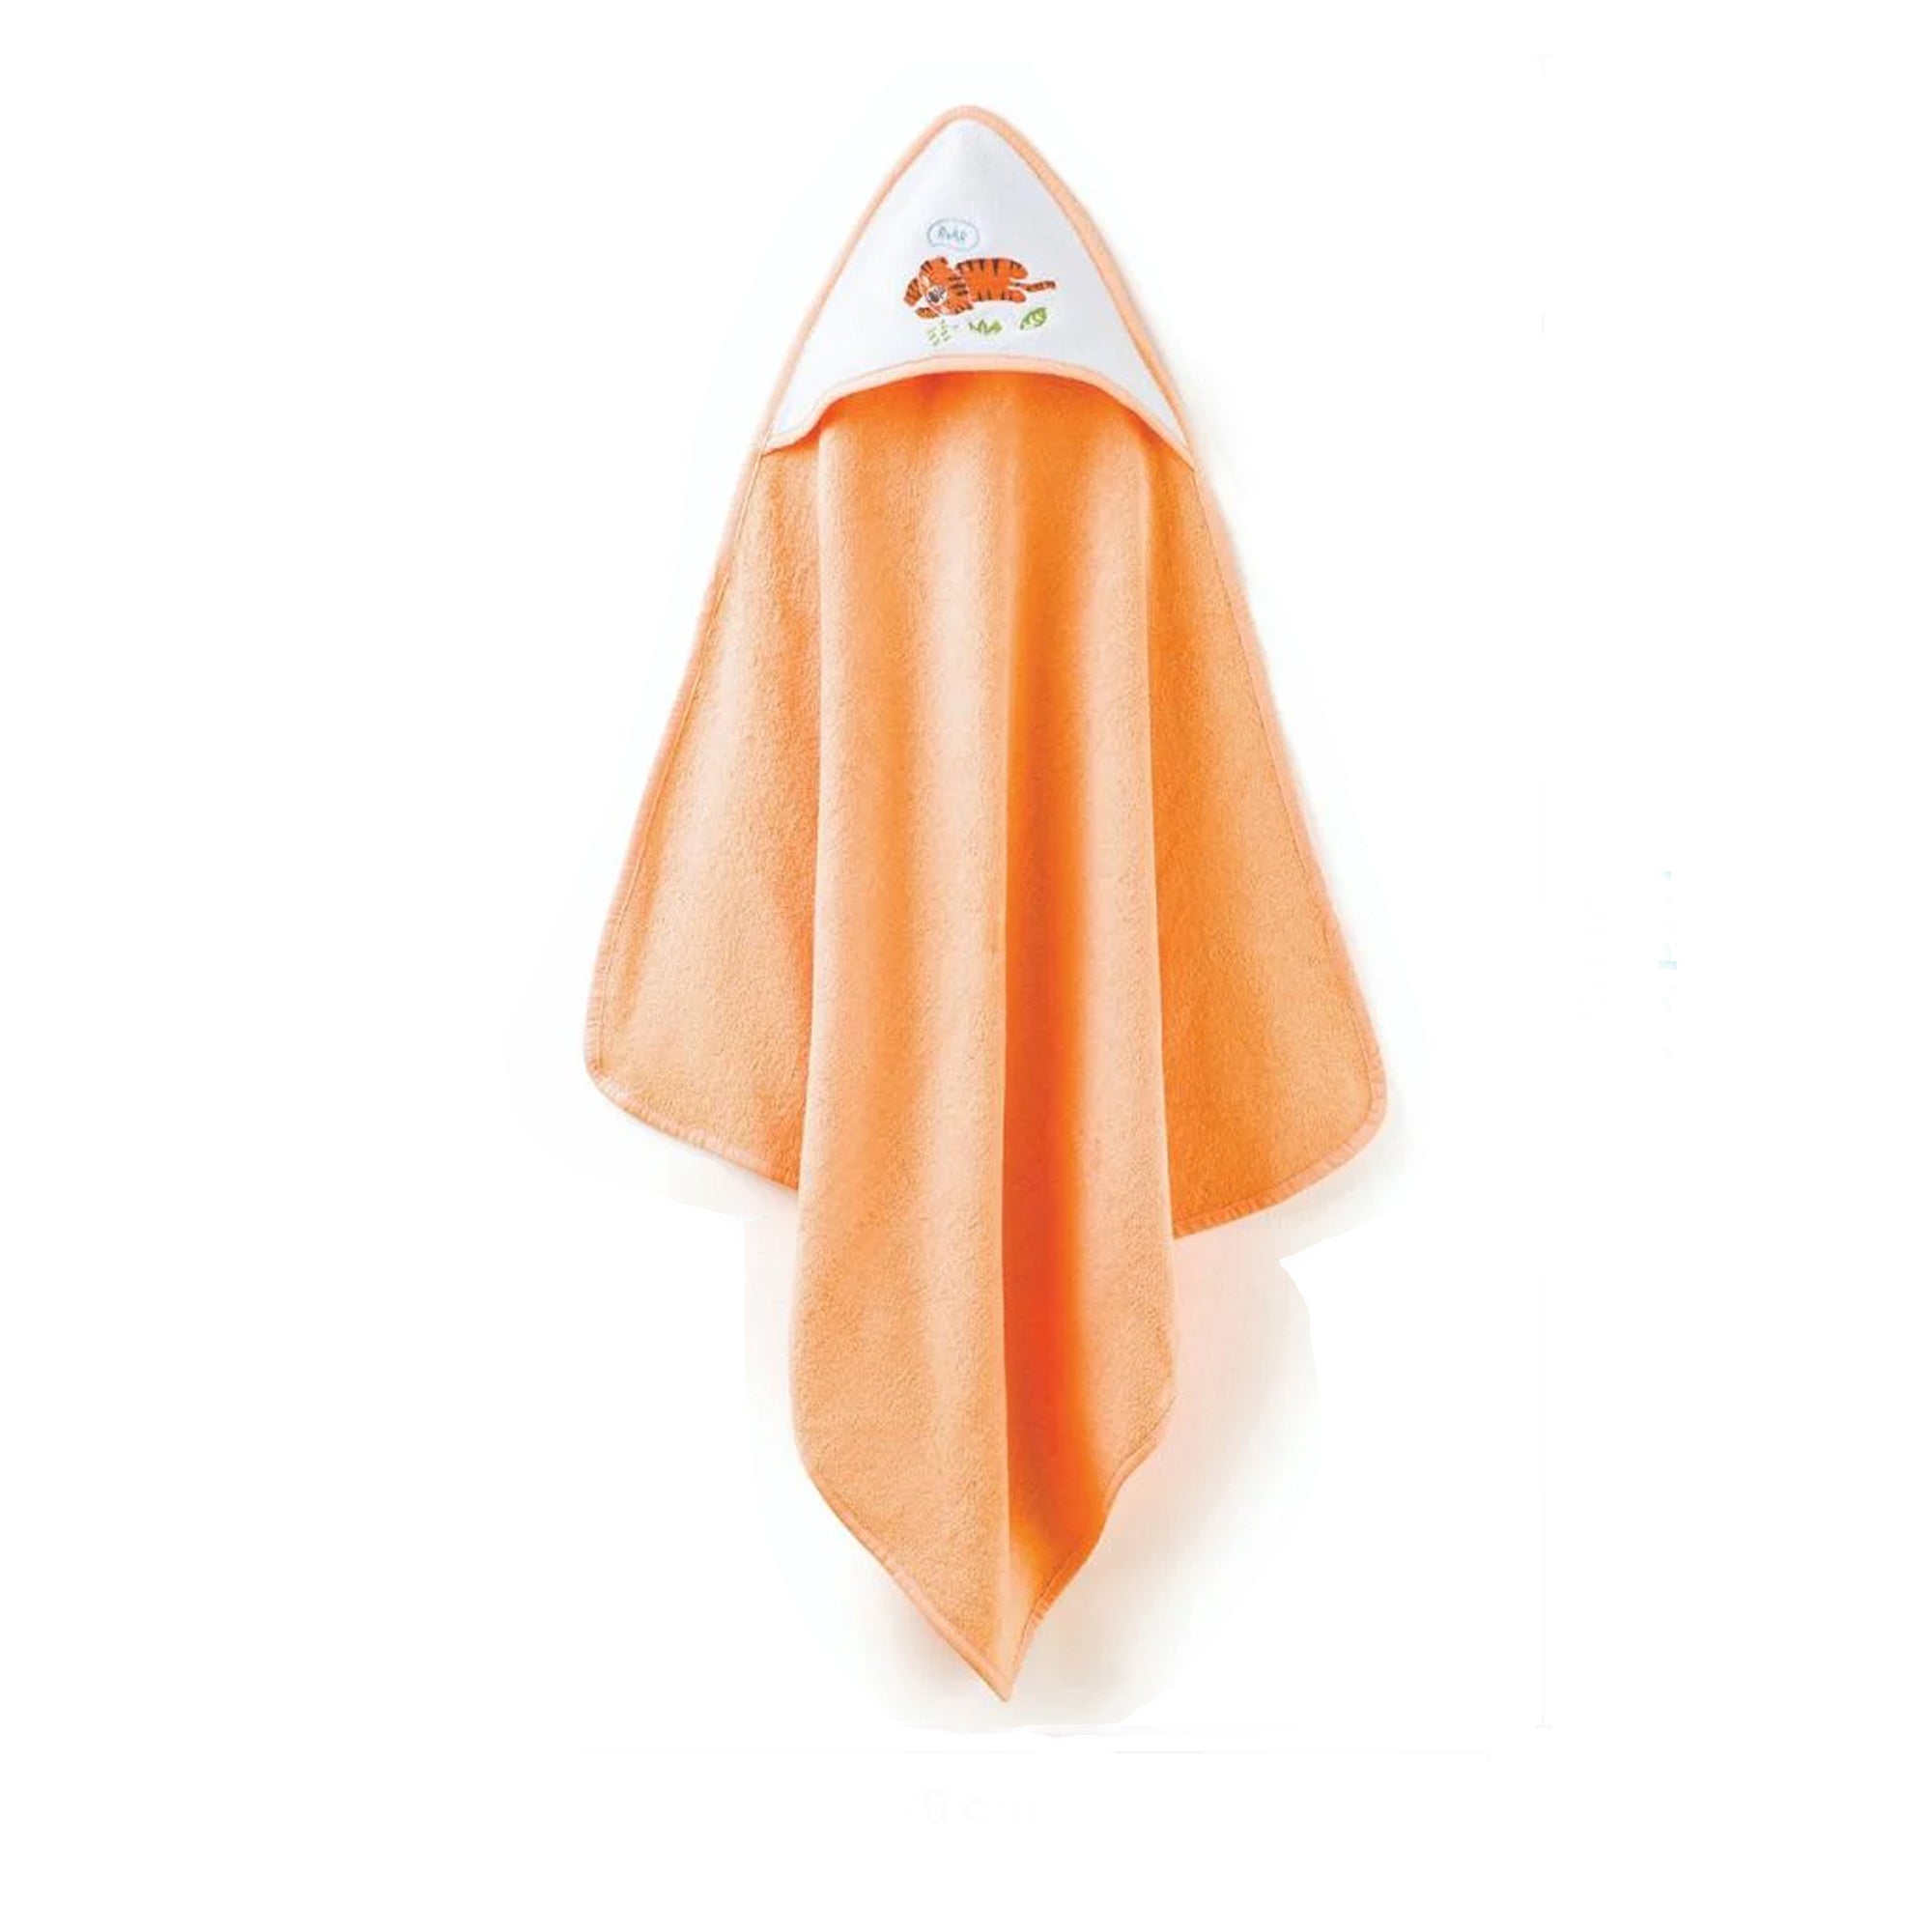 Tidy Sleep Woven Cotton Hooded Baby Bath Towel - Orange